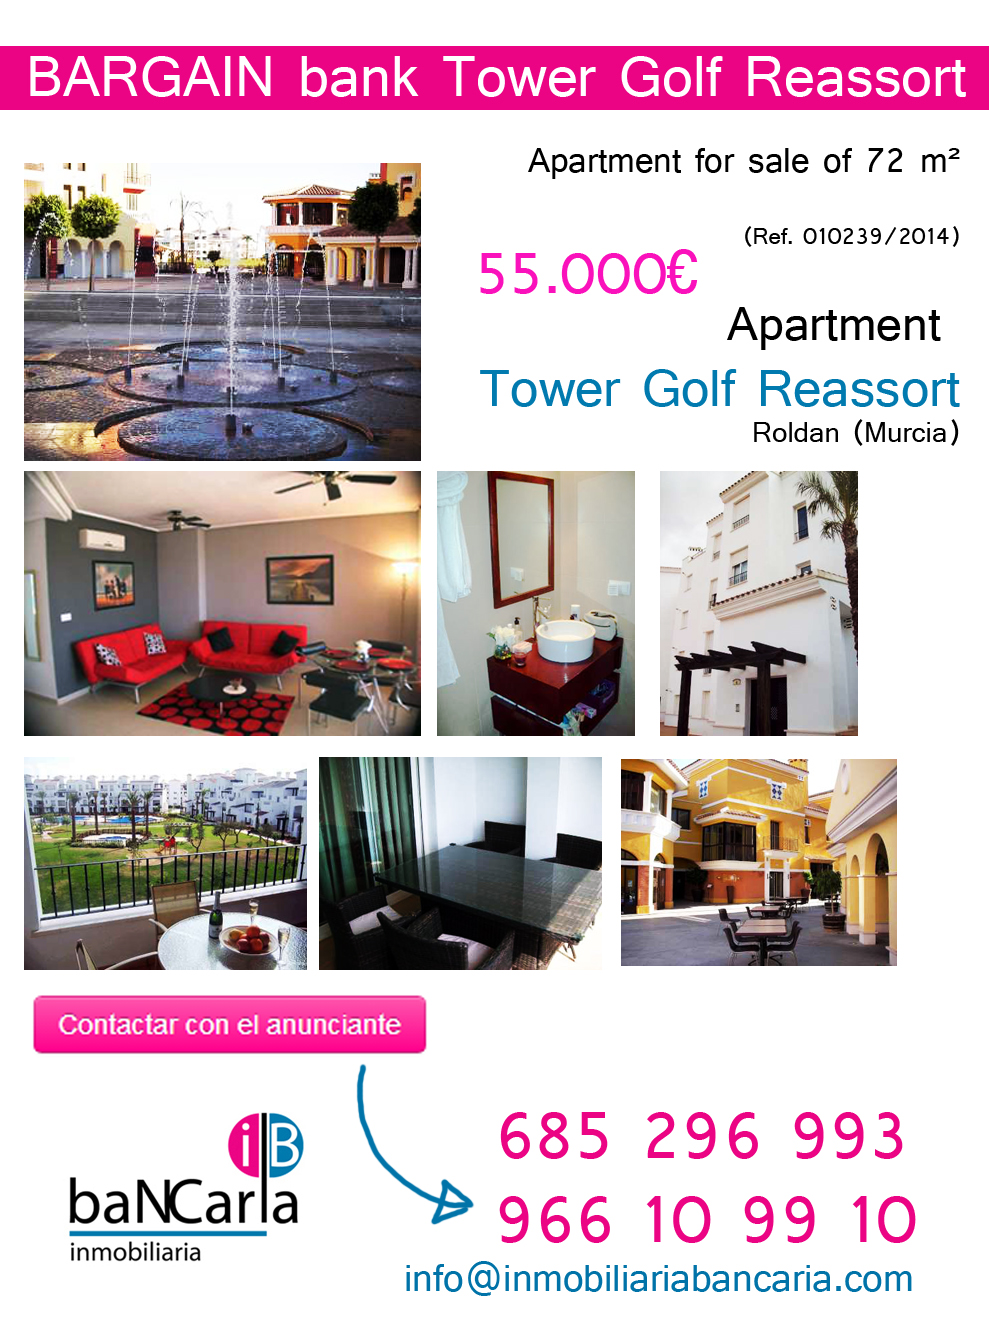 Apartment for sale in  Tower Golf Reassort Roldan (Murcia)